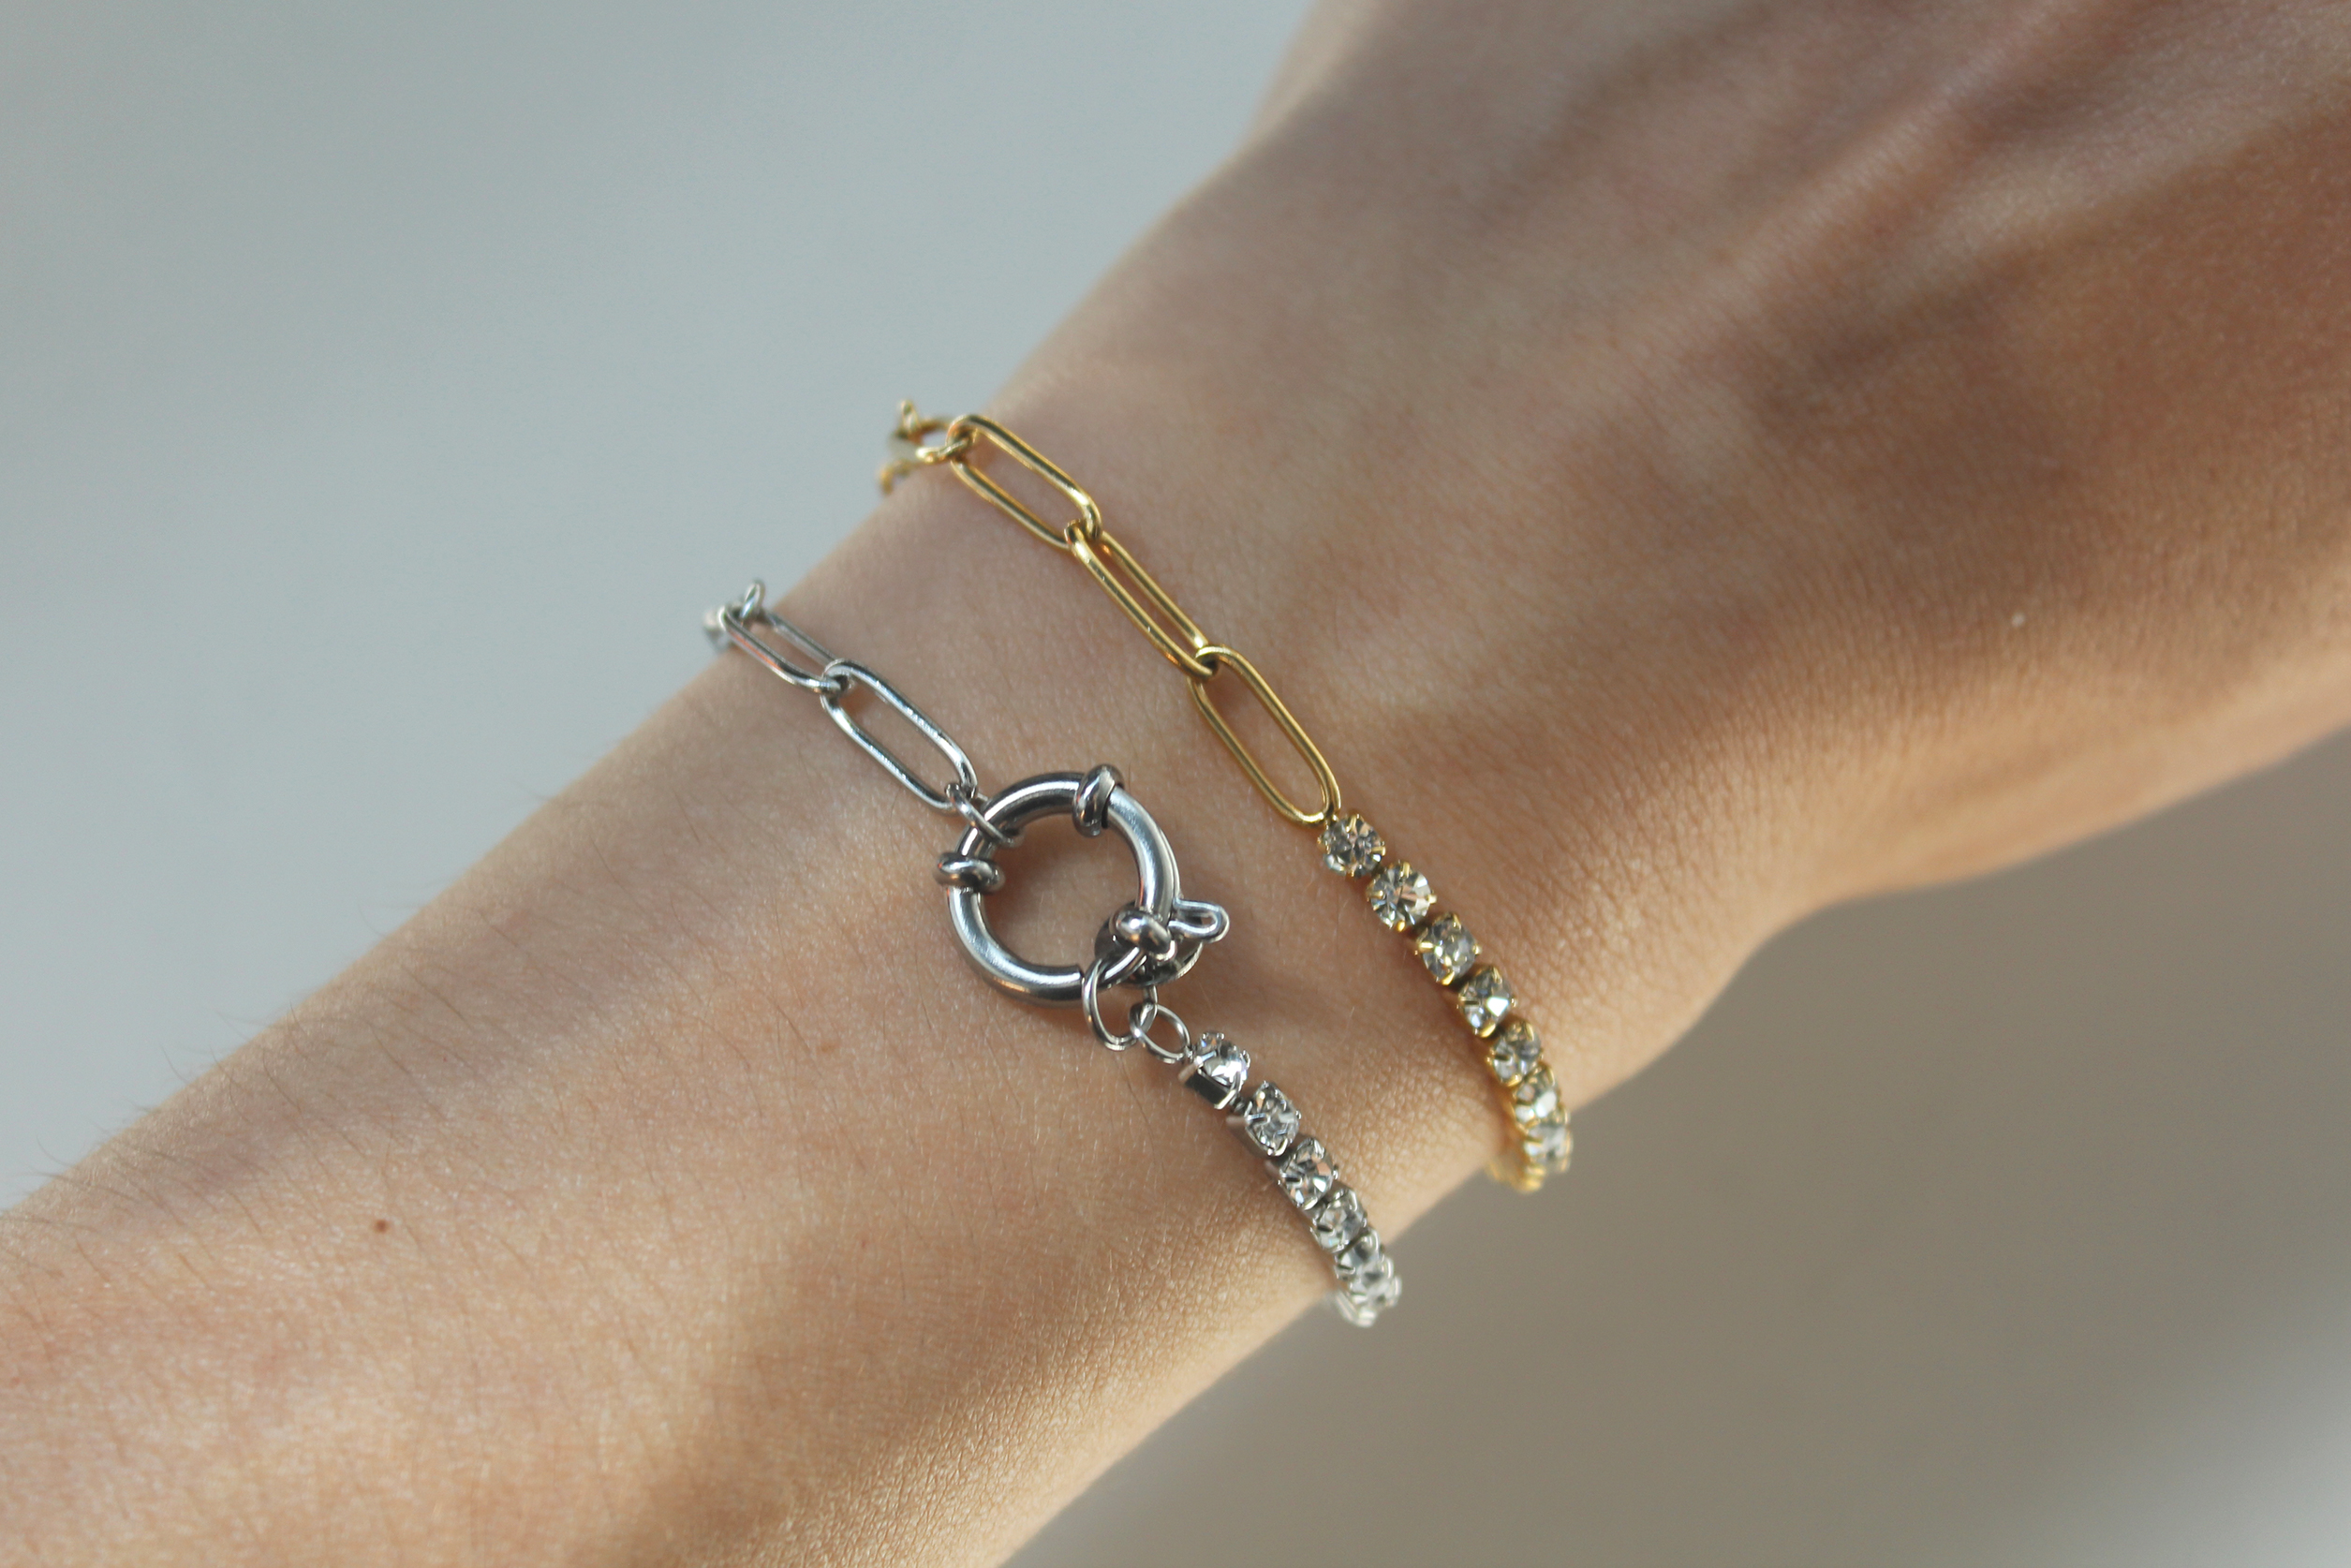 Chain & Diamonds Stainless Steel Bracelet